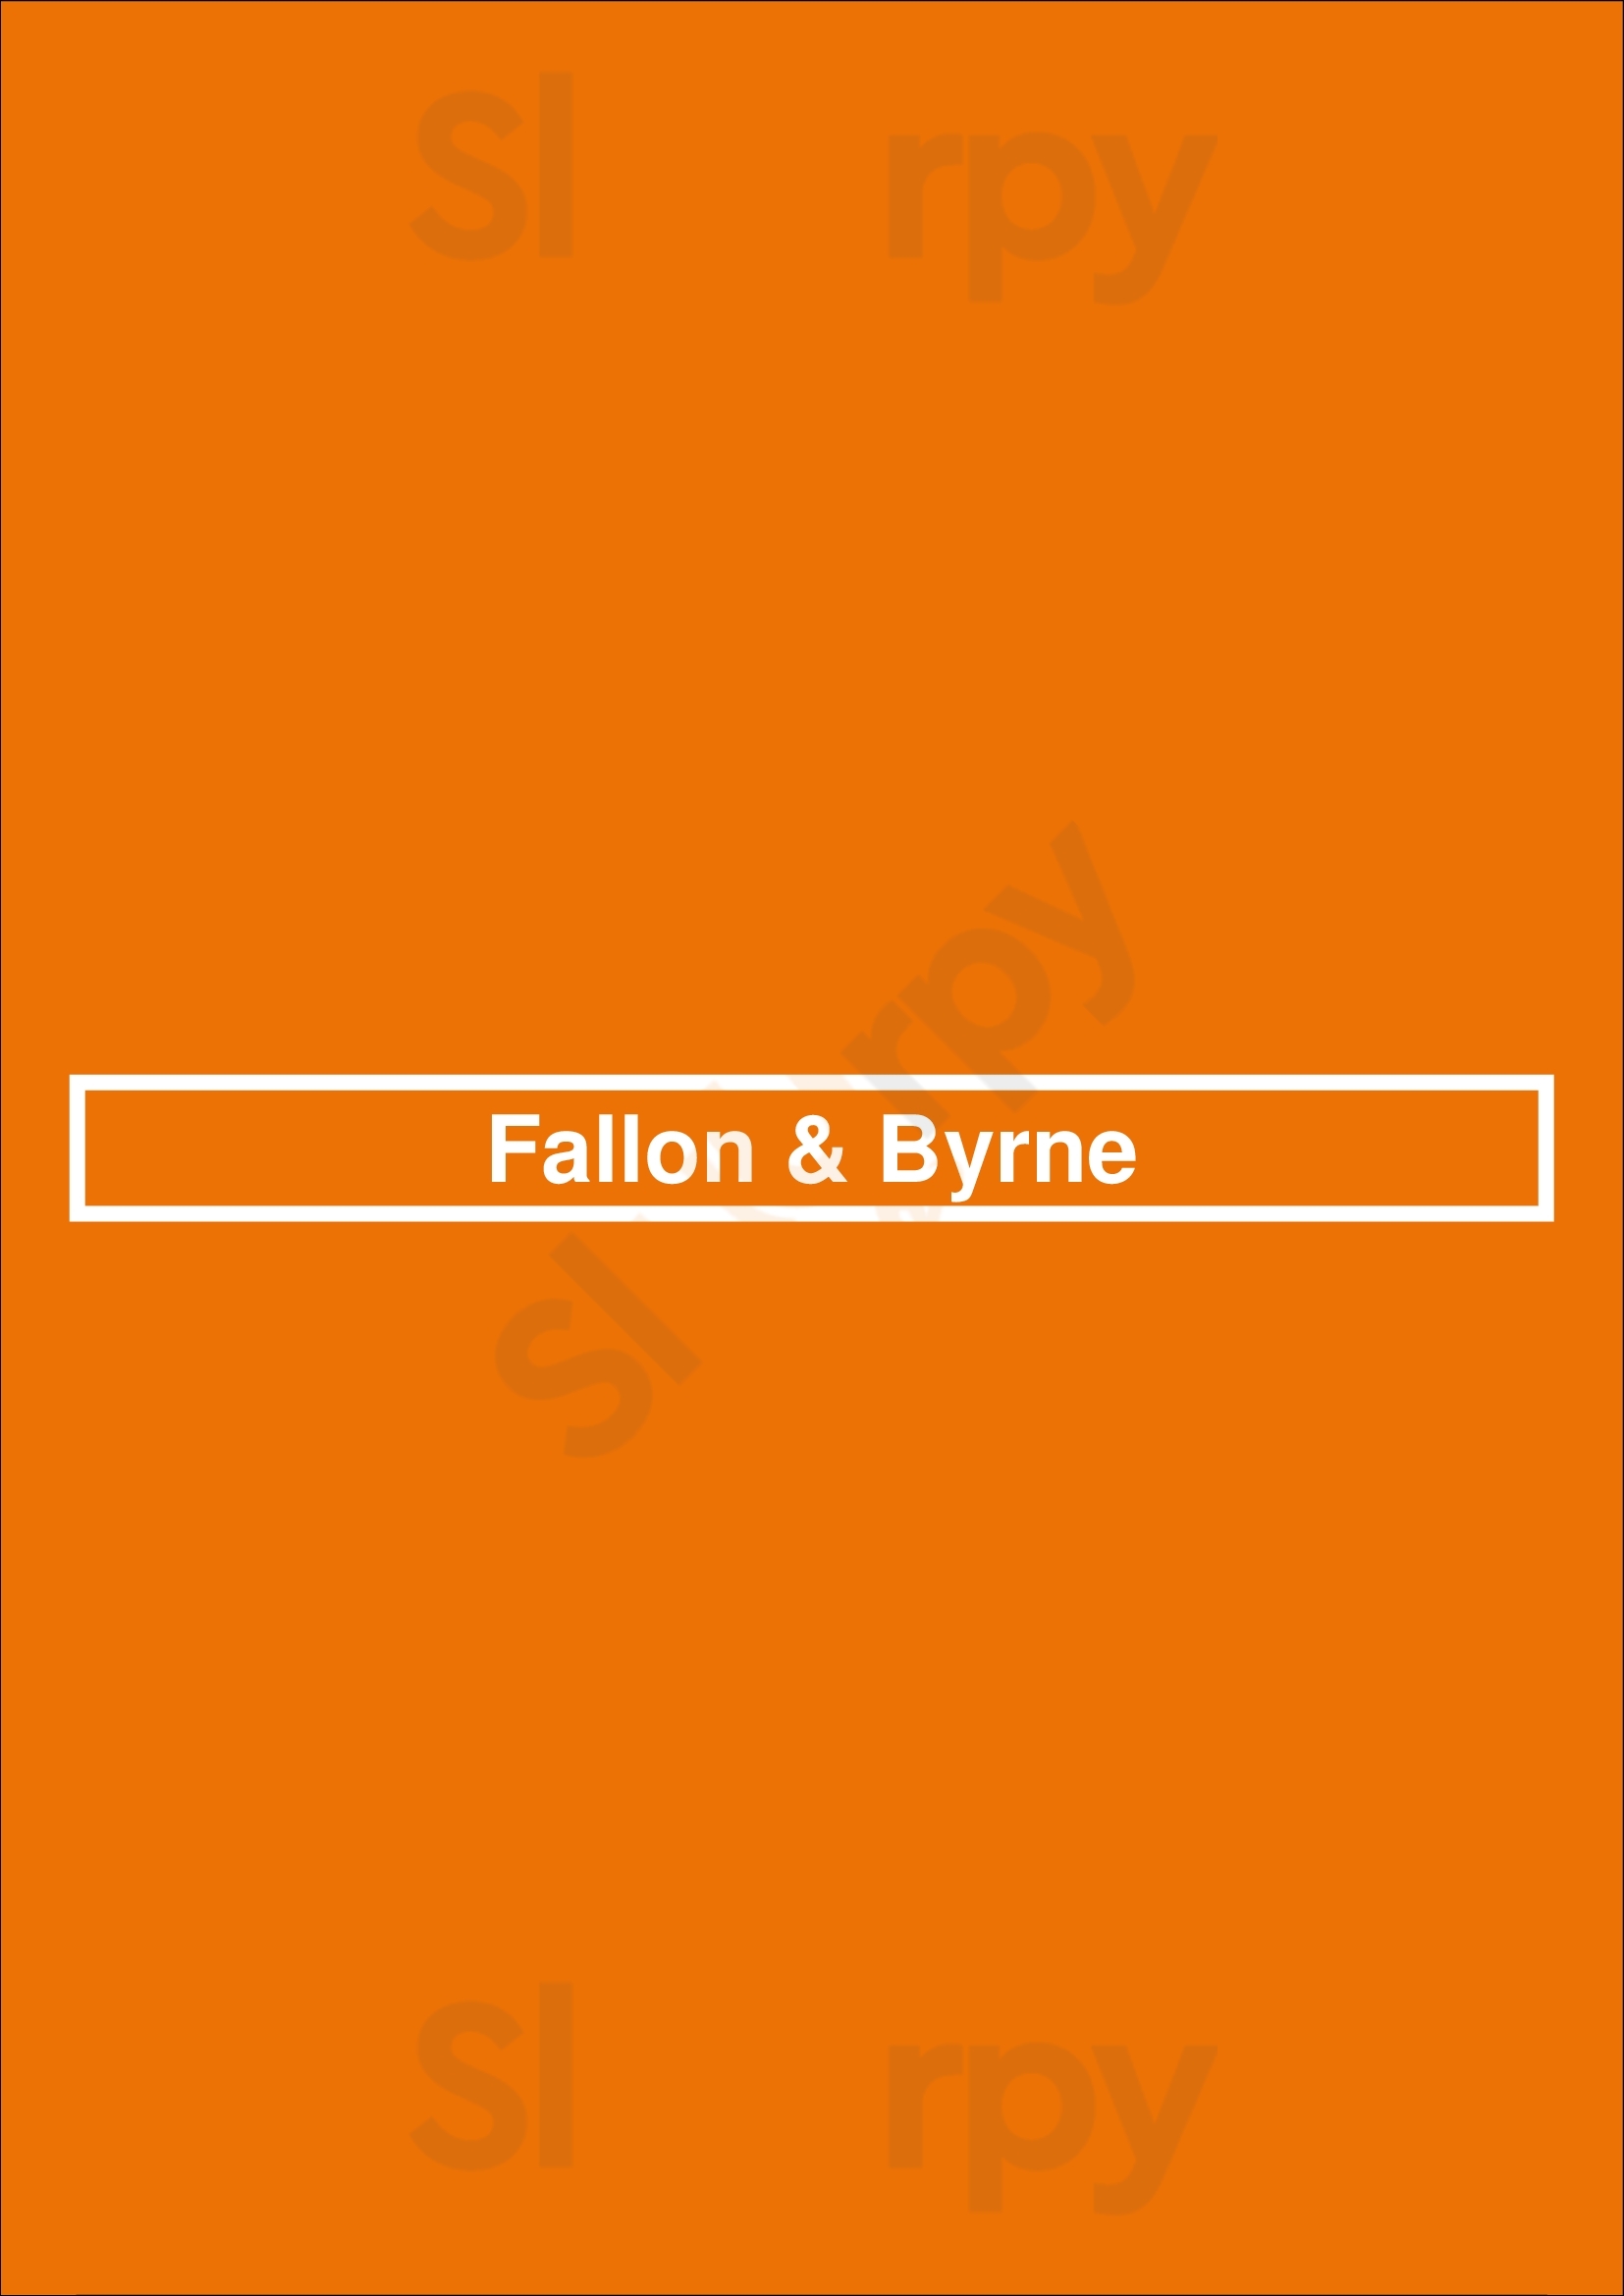 Fallon & Byrne Dining Room Dublin Menu - 1